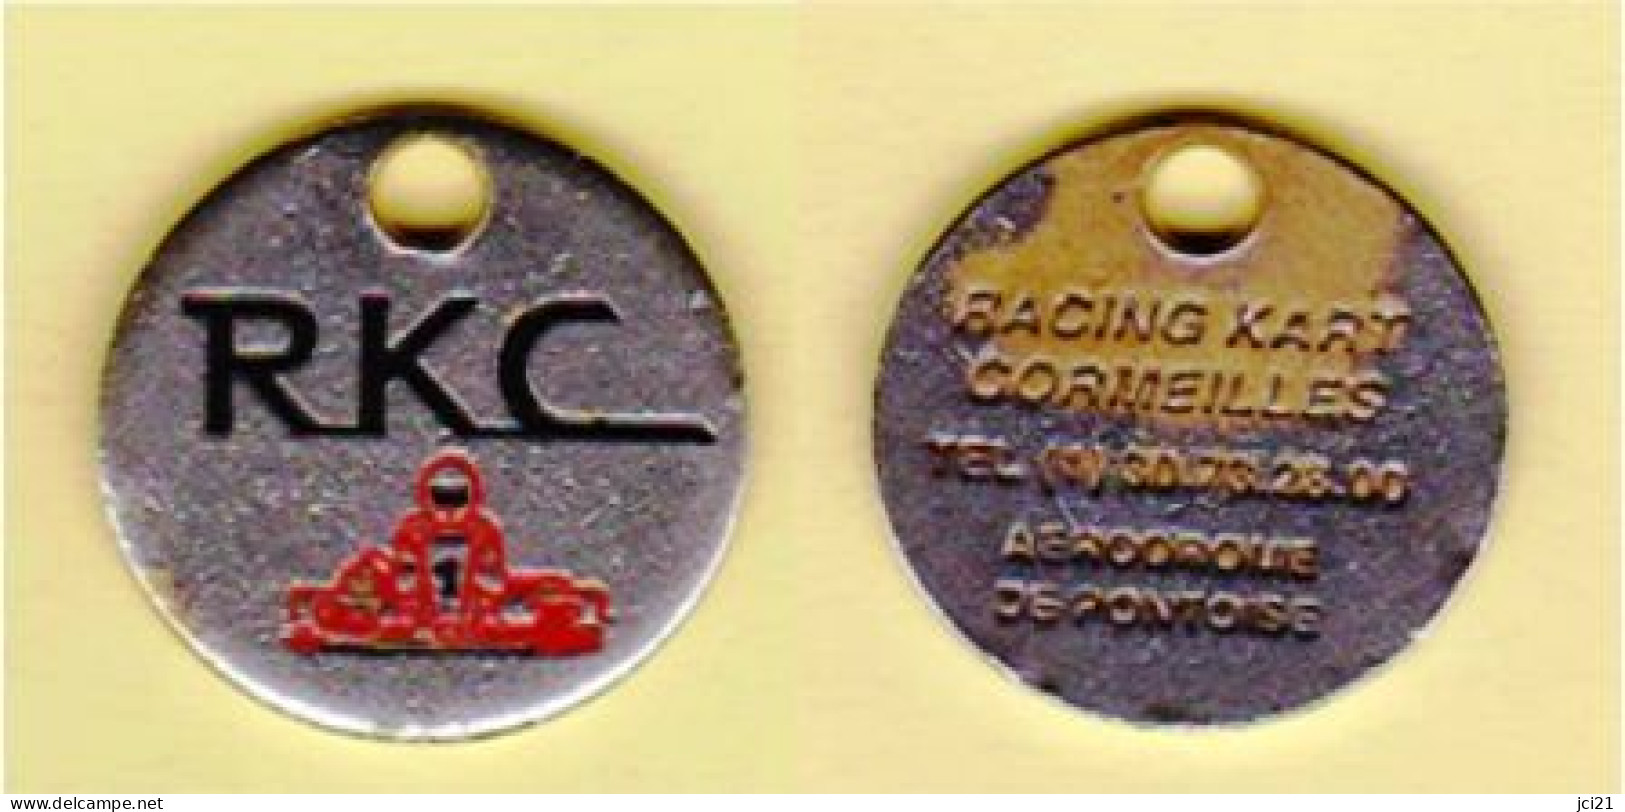 Jeton De Caddie " RKC - RACING KART CORMEILLES - Aérodrome De Pontoise" Karting [G]_Je045 - Einkaufswagen-Chips (EKW)